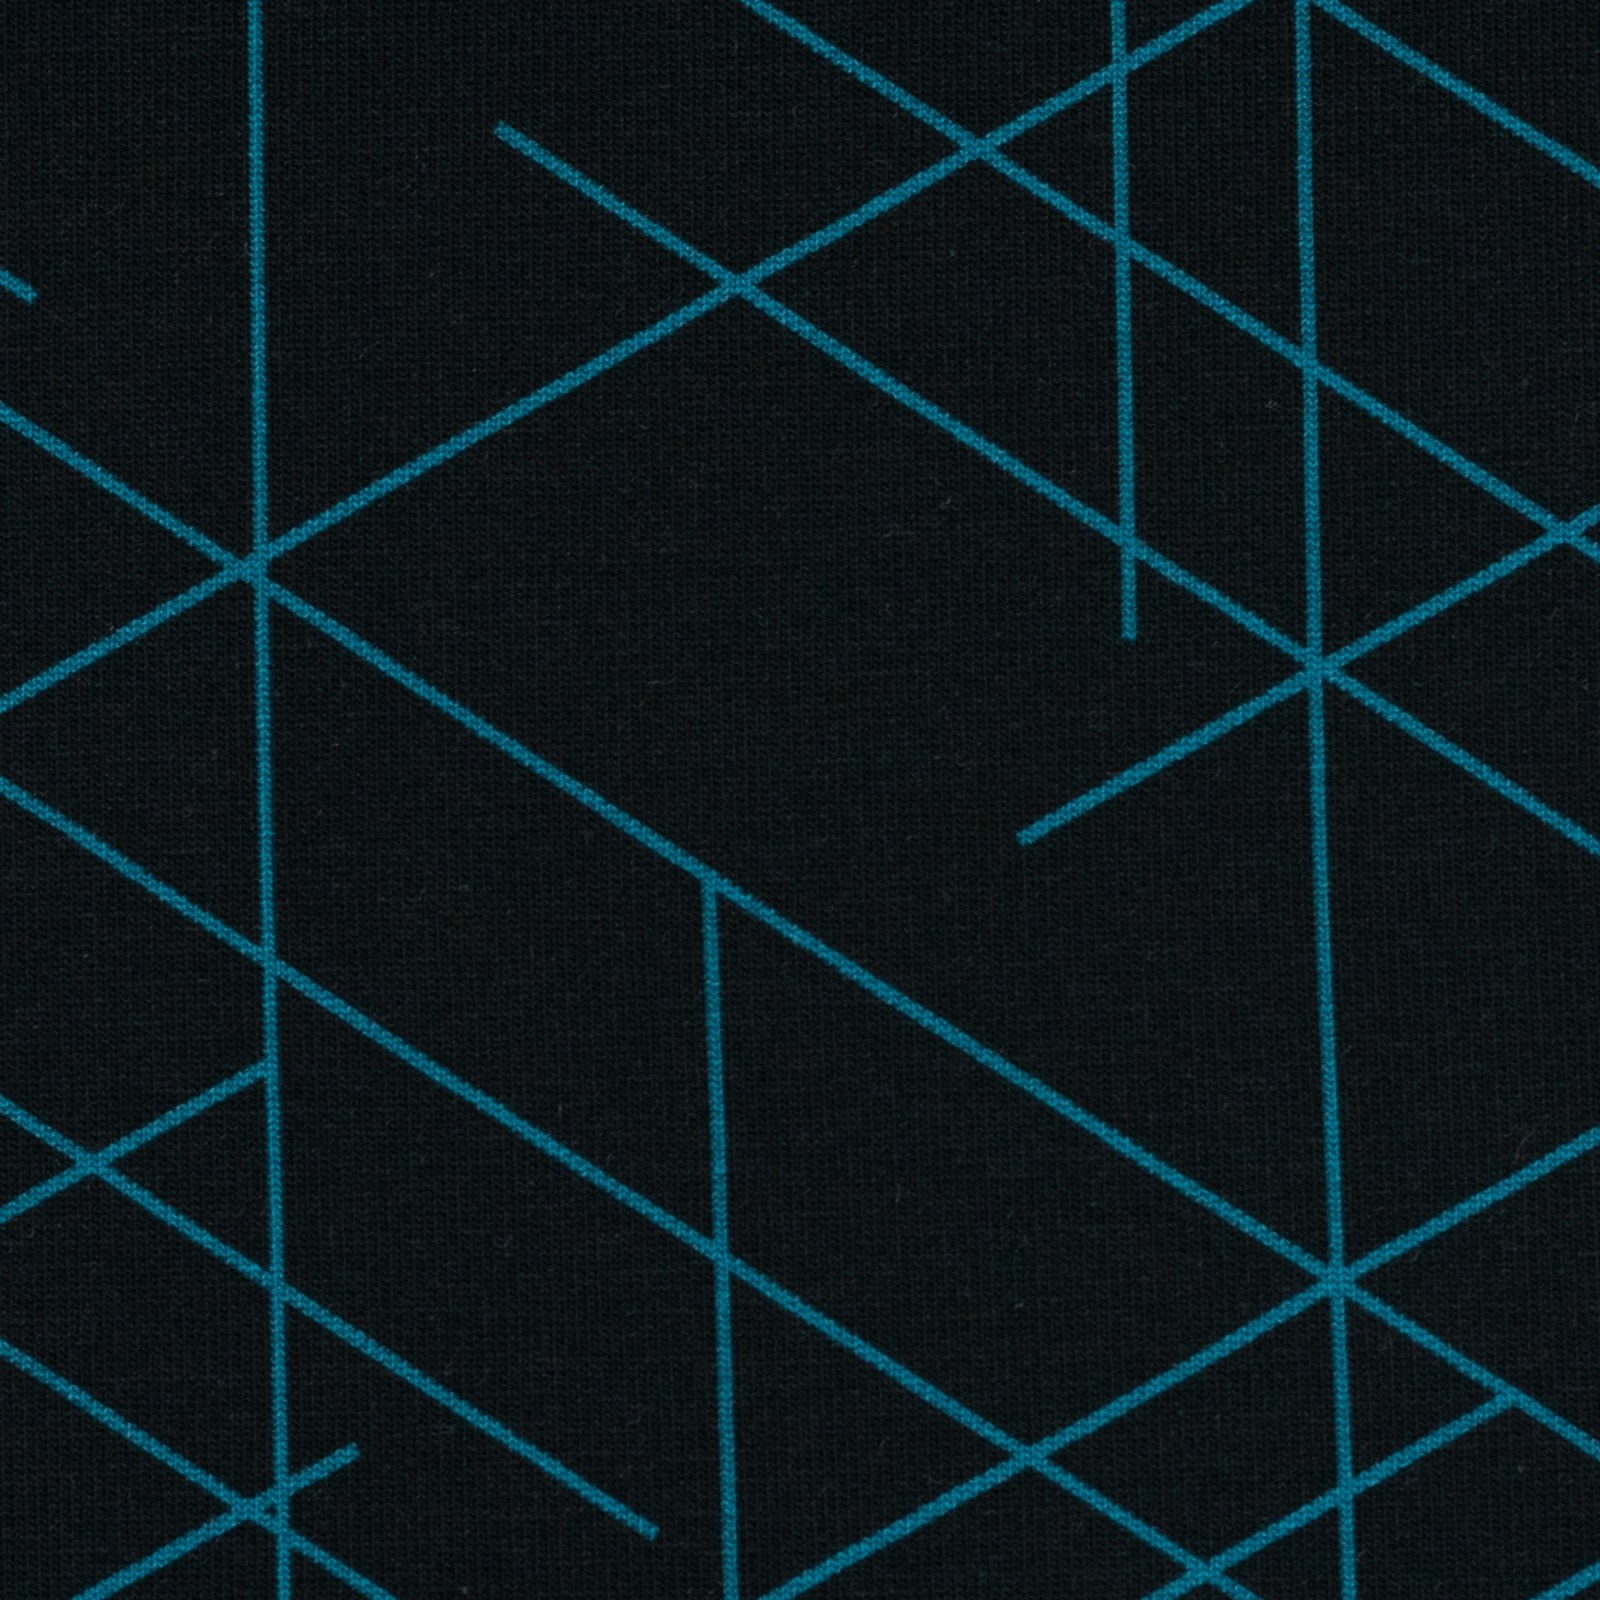 French Terry Dreiecke Linien türkis auf blau blau Streetstyle by lycklig design, Sommersweat